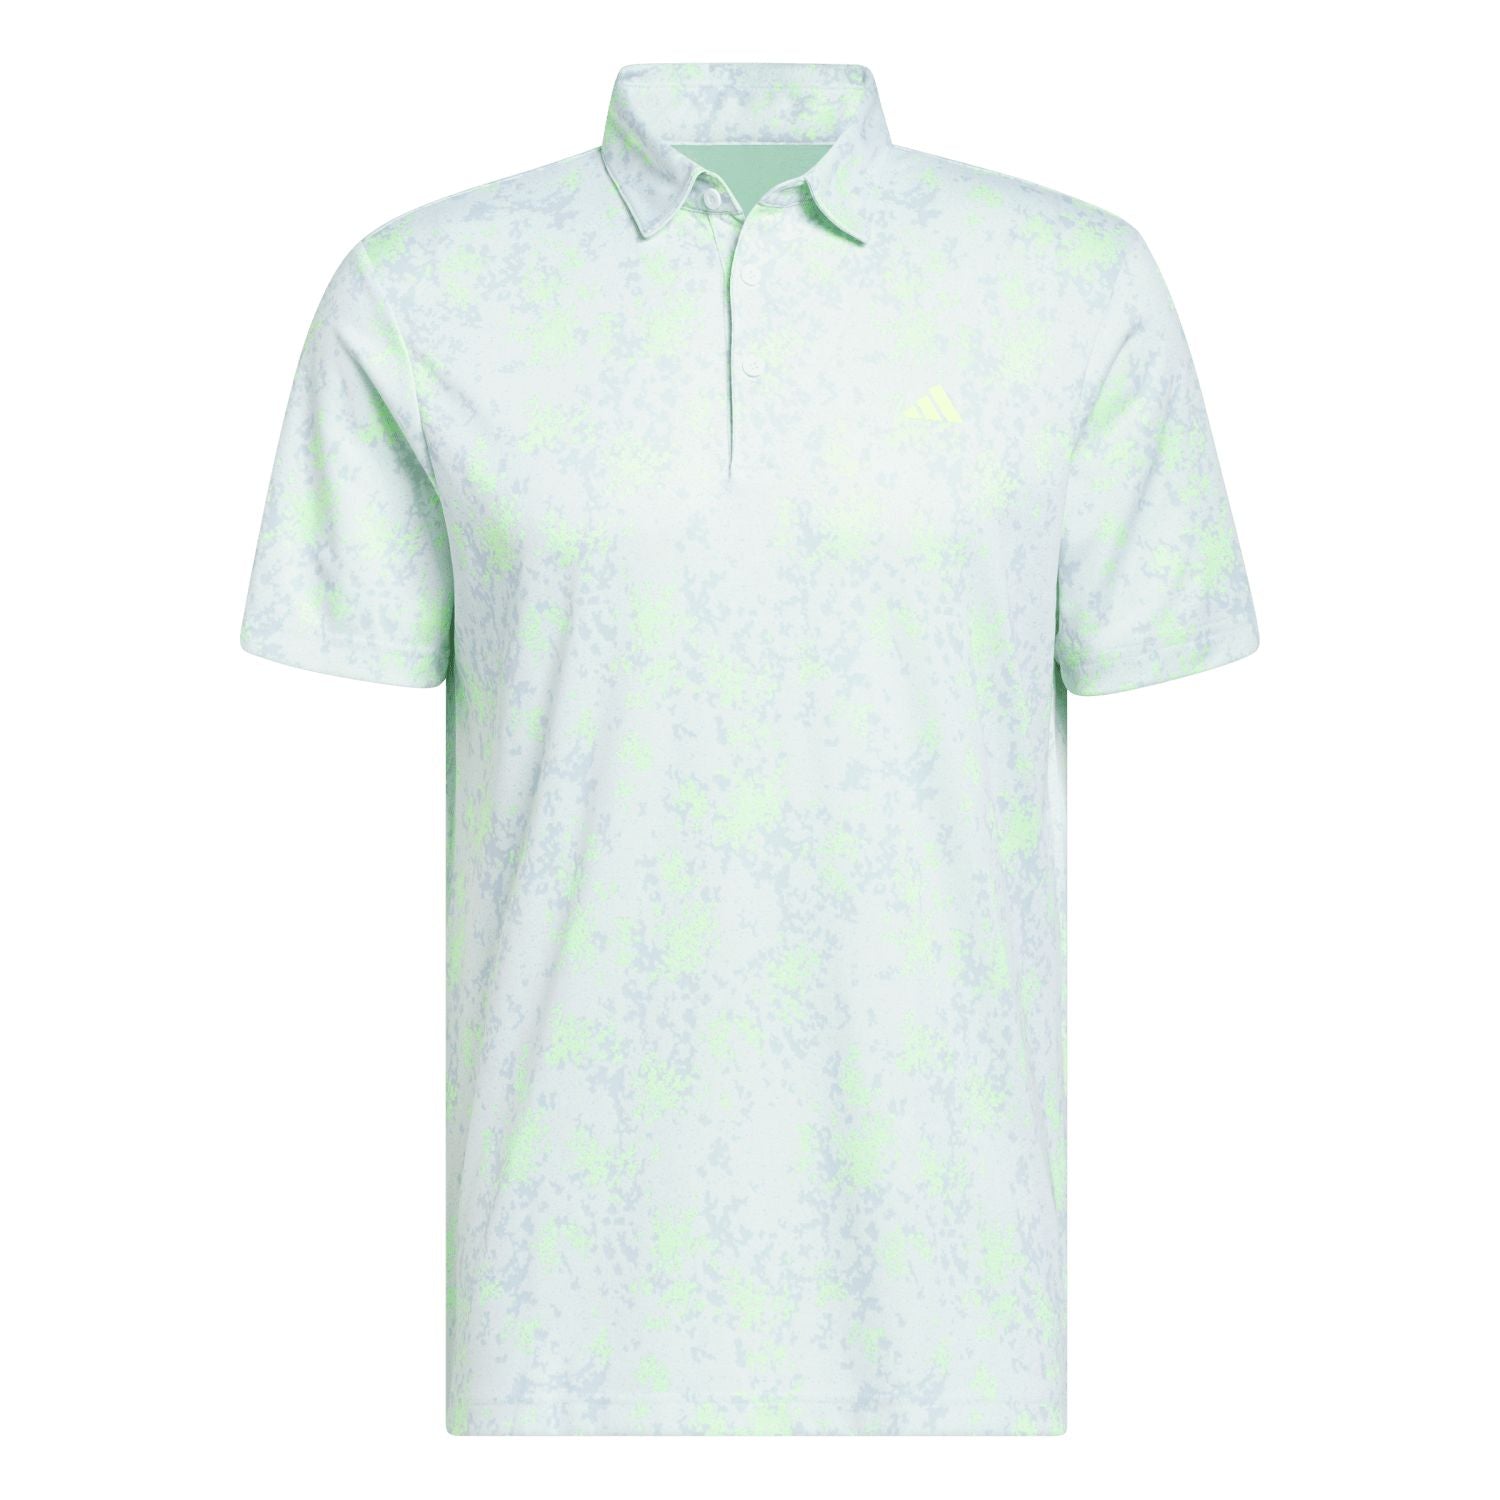 adidas Mens Golf Burst Jacquard Shirt